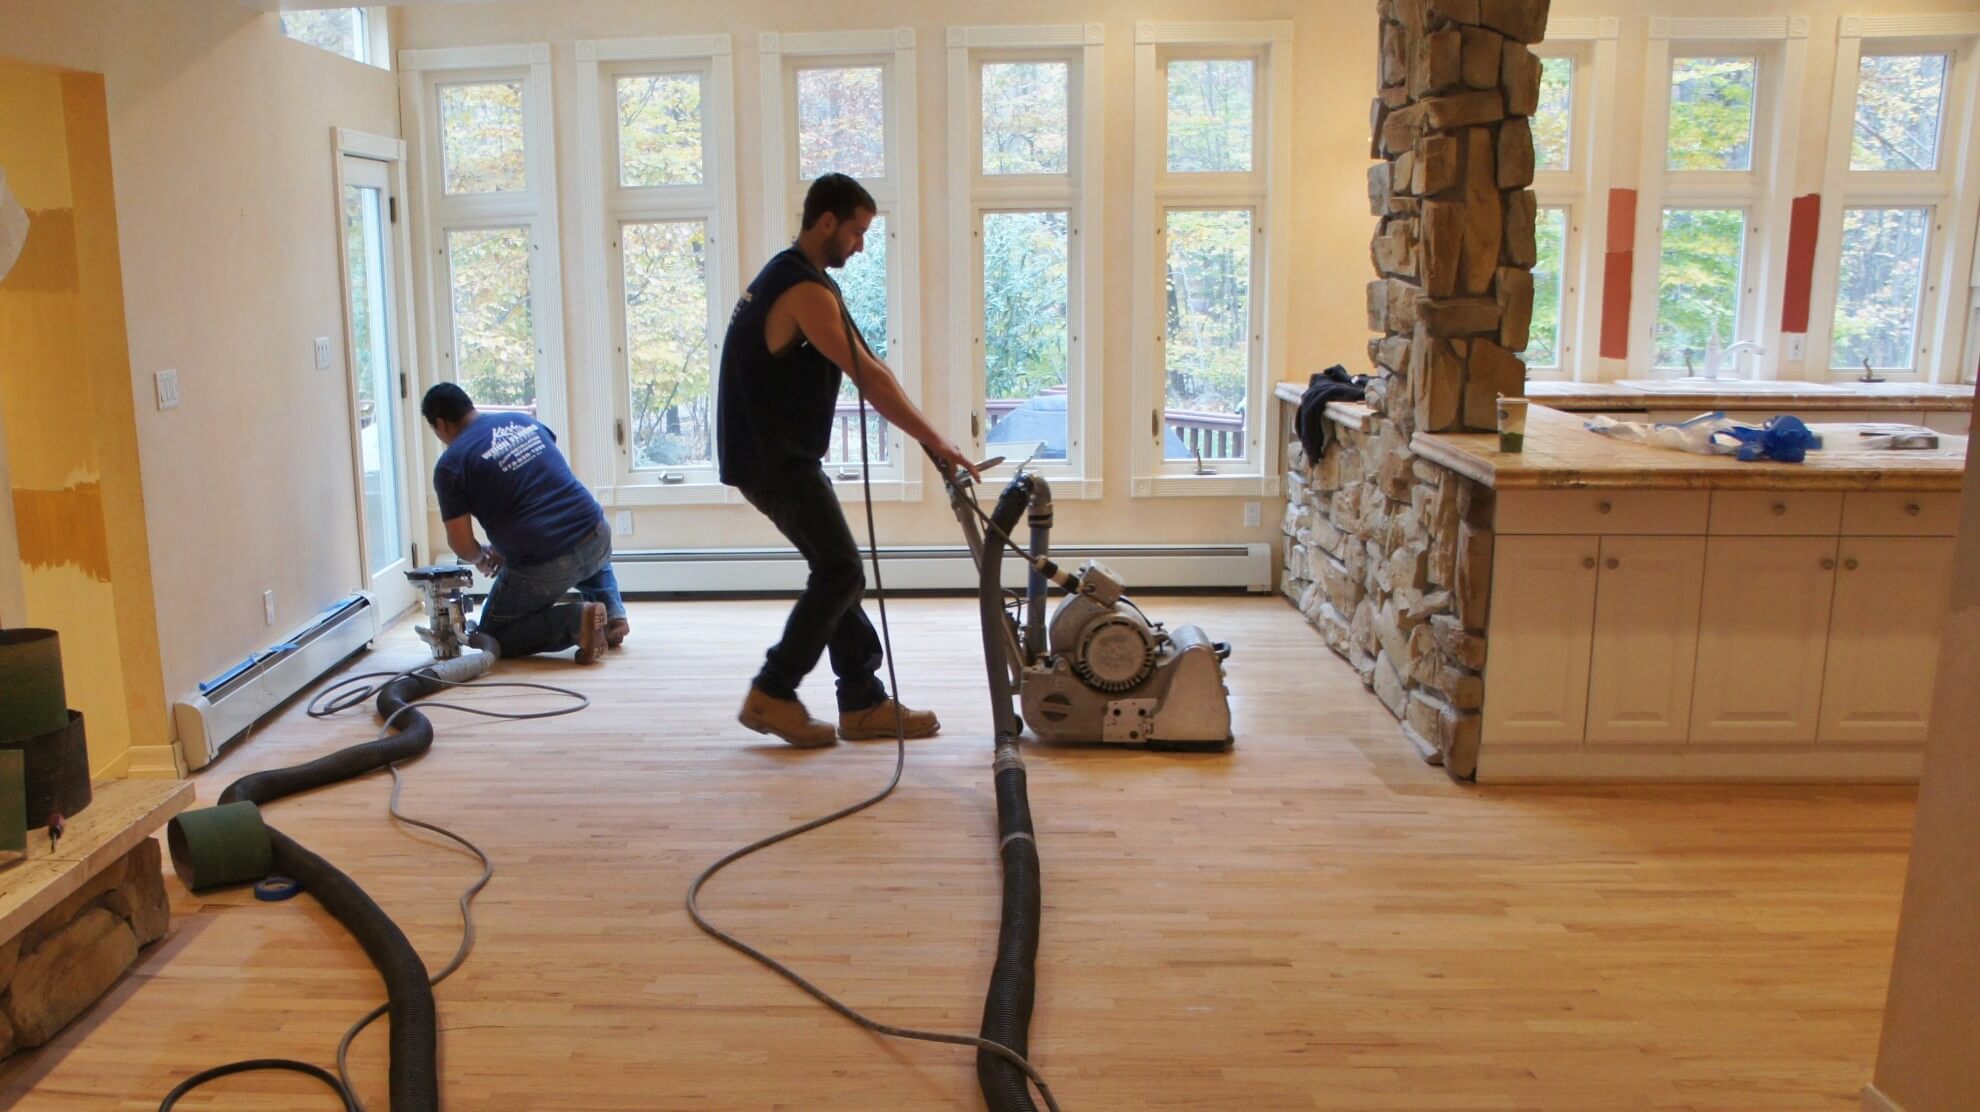 Dustless Hardwood Floor Solution In, Dustless Hardwood Floor Refinishing Cost